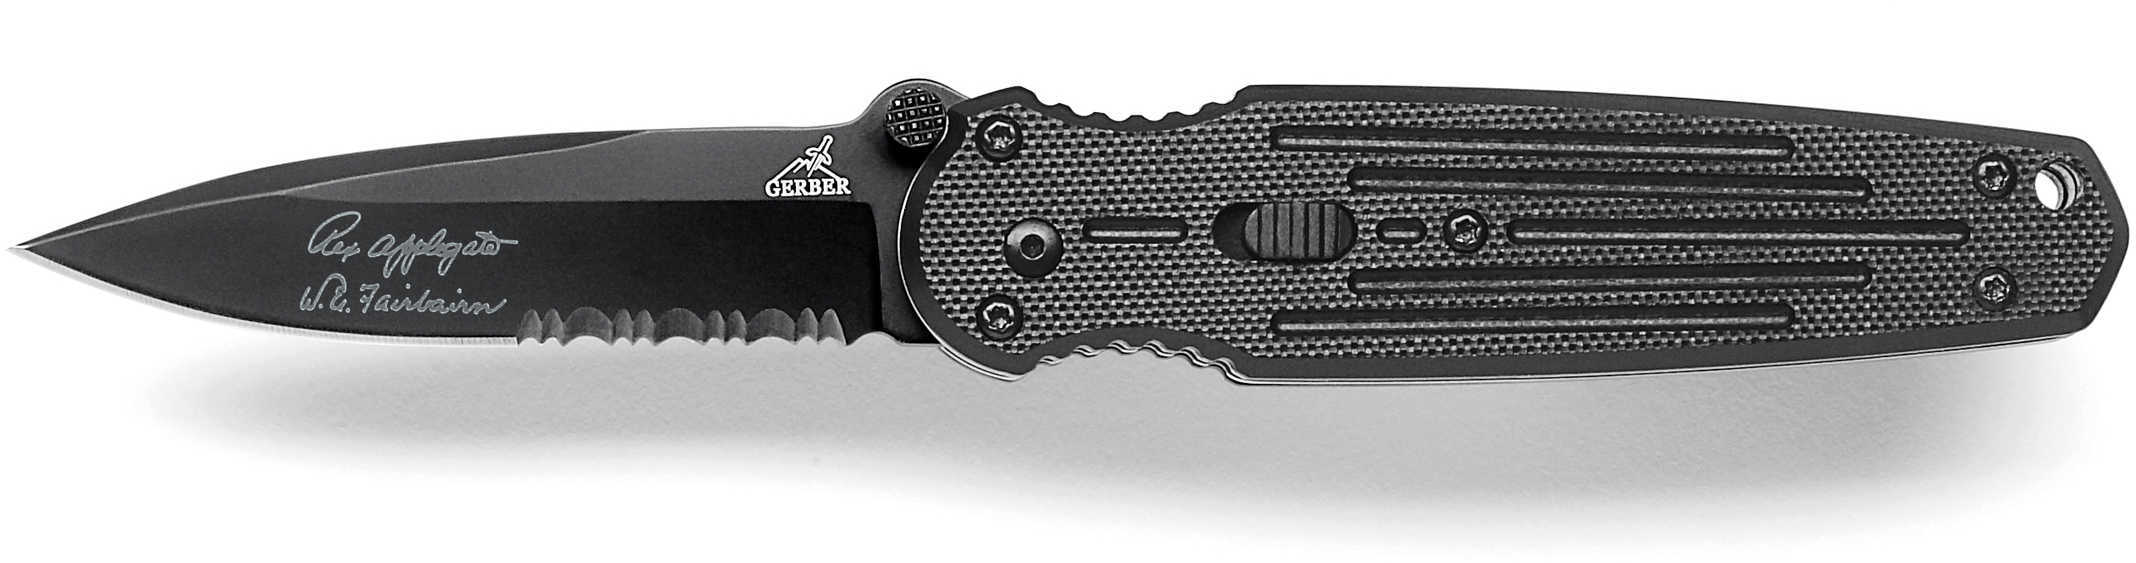 Gerber Spear Point Folder Knife With Black G10 Handle Md: 01967